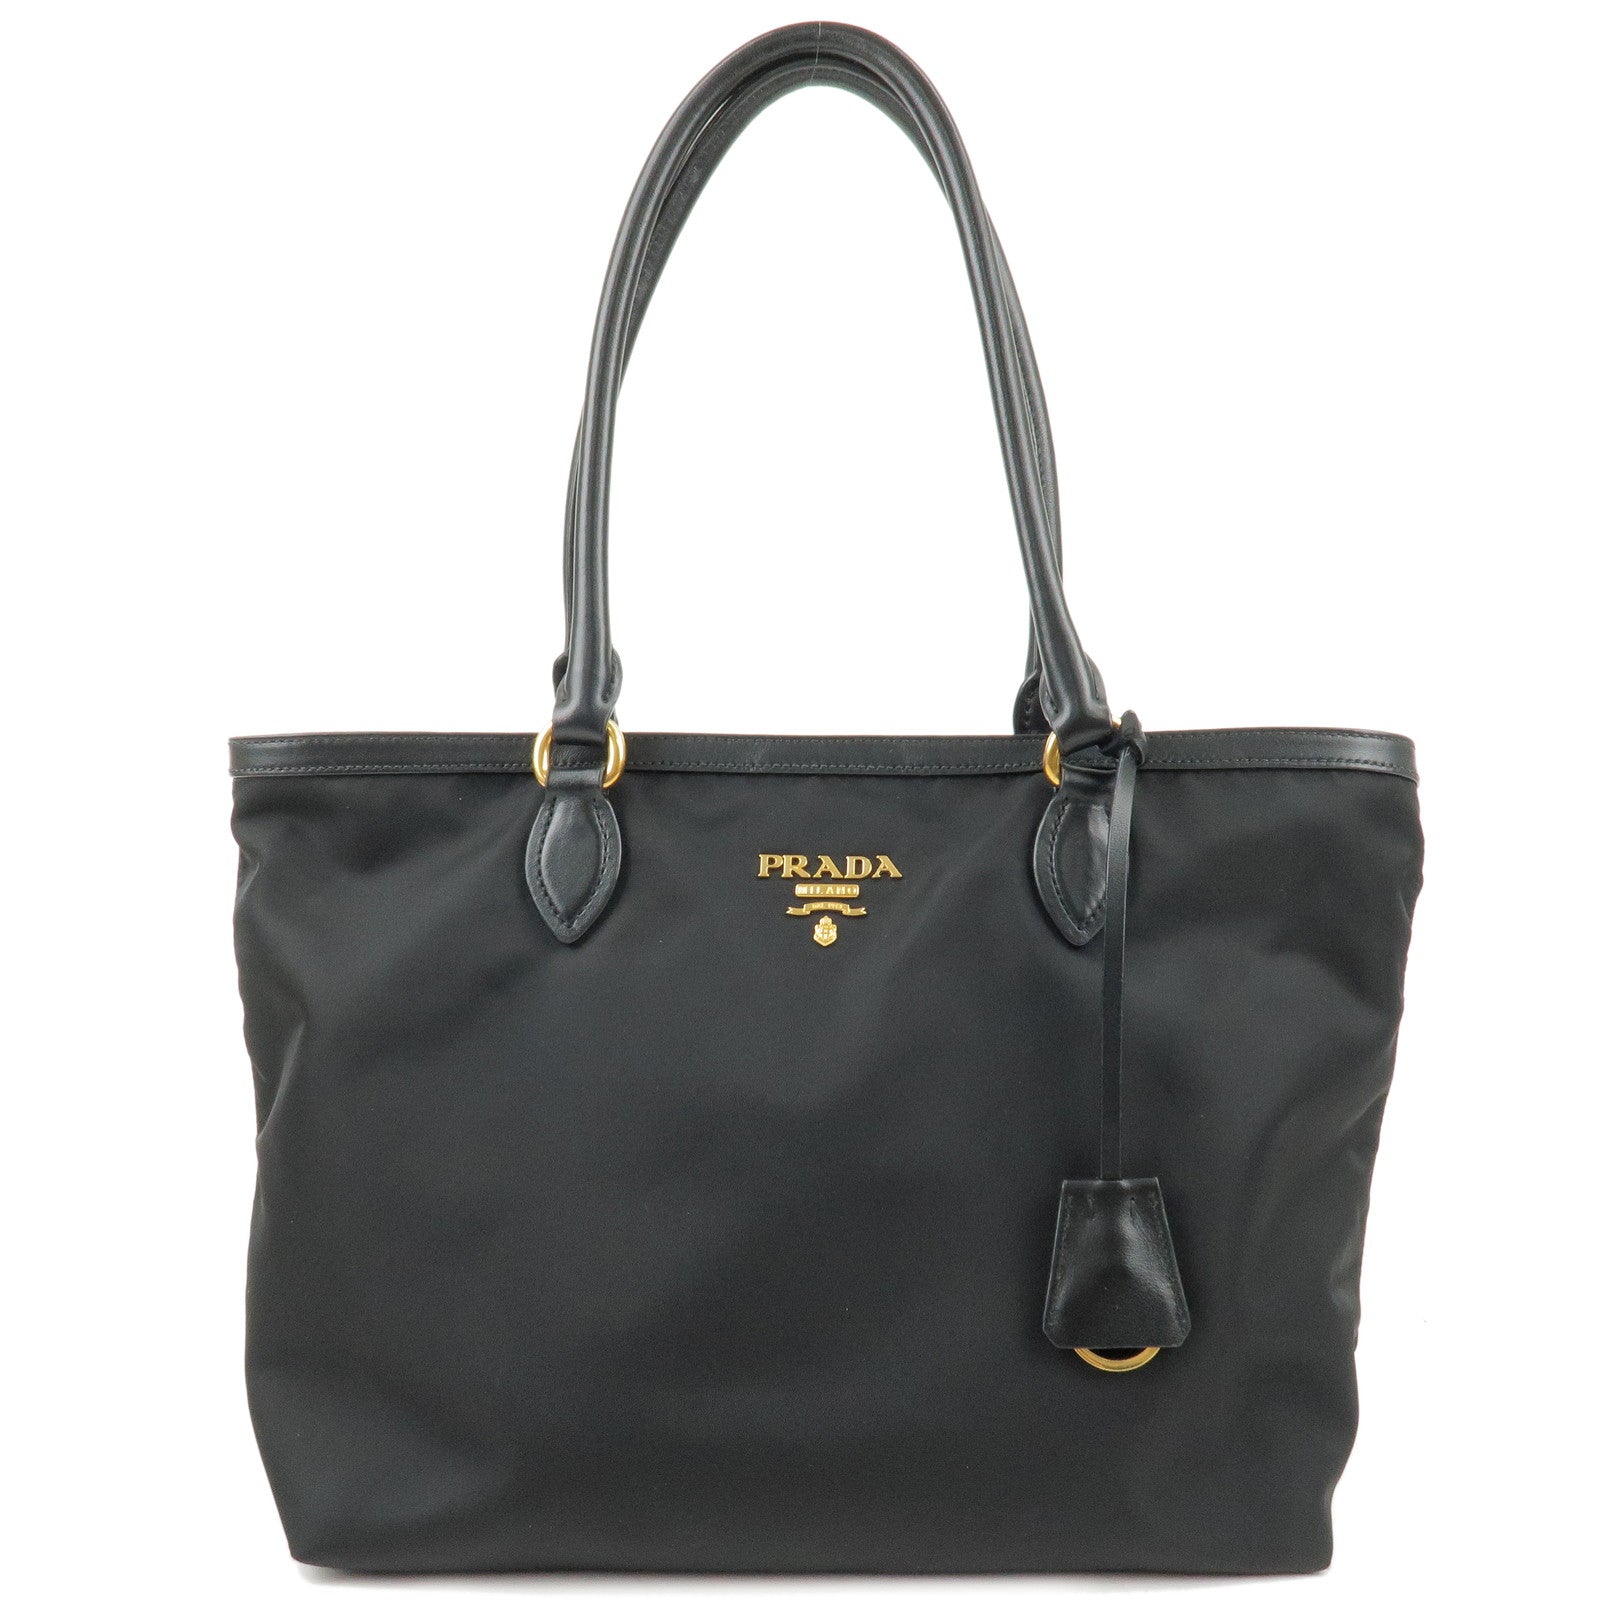 PRADA-Logo-Nylon-Leather-Tote-Bag-Shoulder-Bag-Black-1BG159